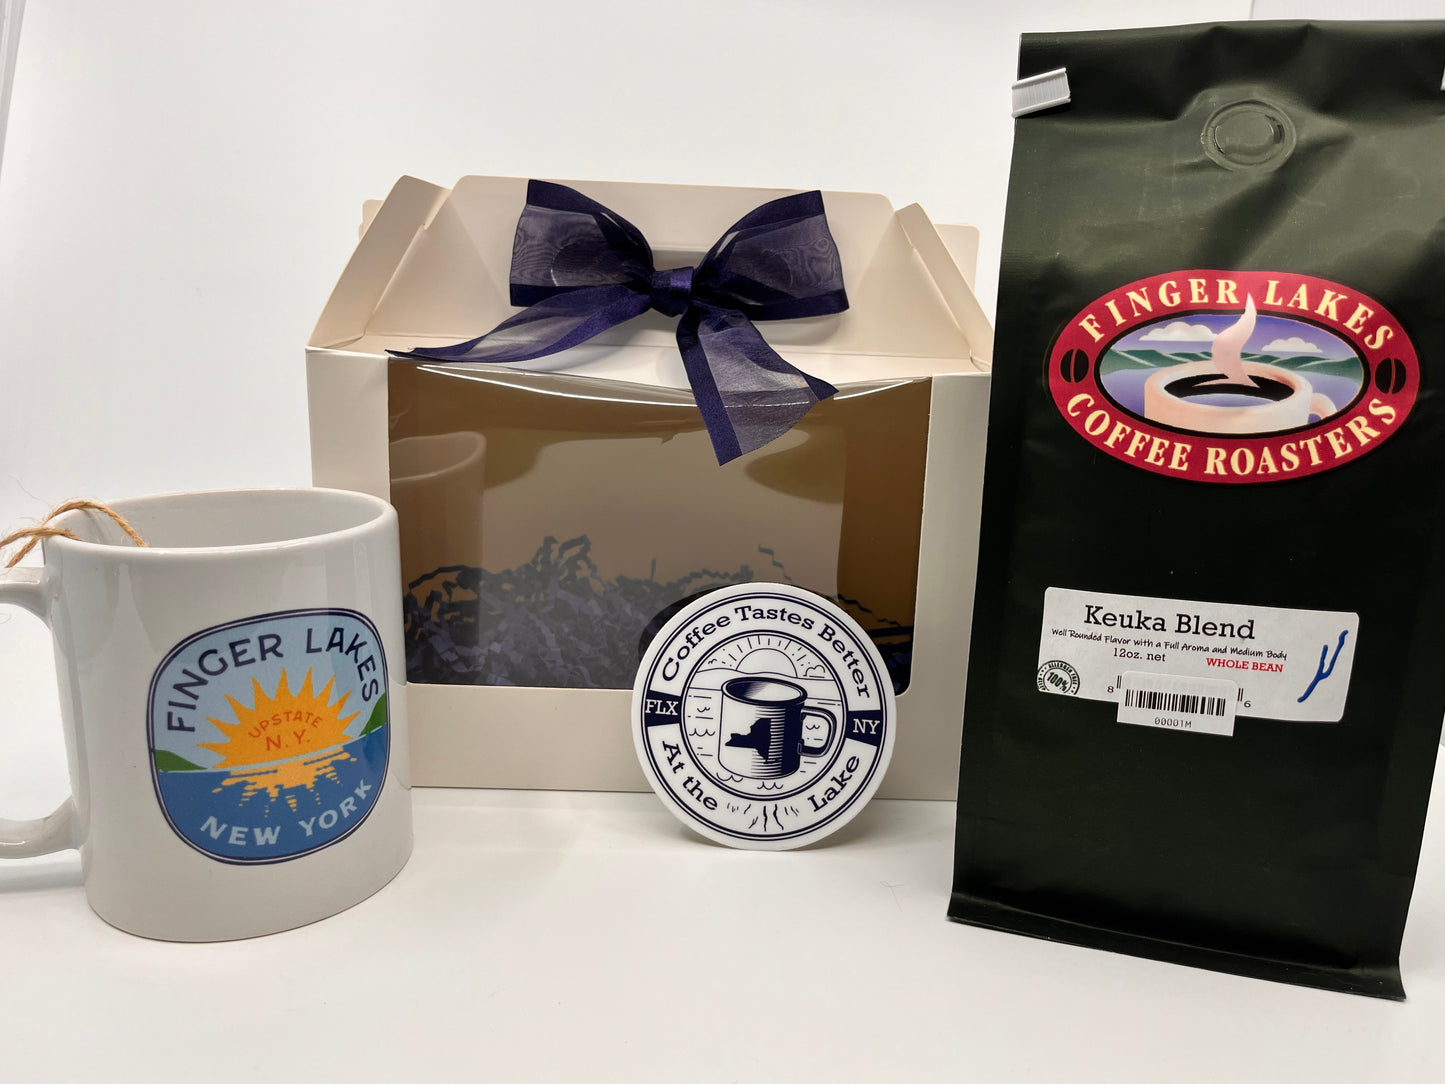 Finger Lakes Coffee, Mug and Sticker gift set